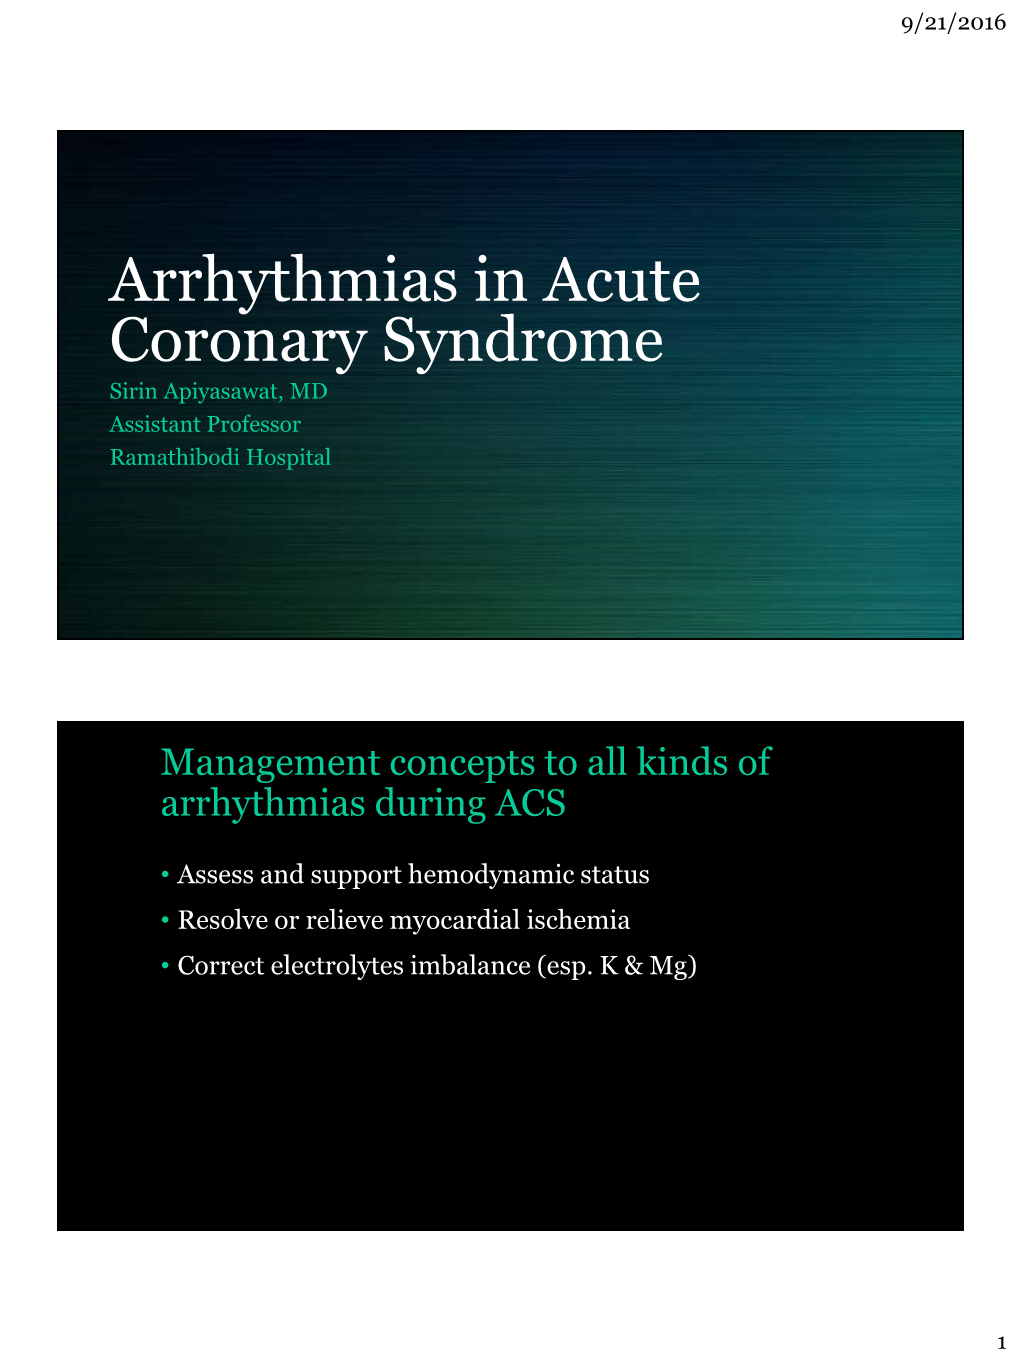 Arrhythmias in Acute Coronary Syndrome Sirin Apiyasawat, MD Assistant Professor Ramathibodi Hospital